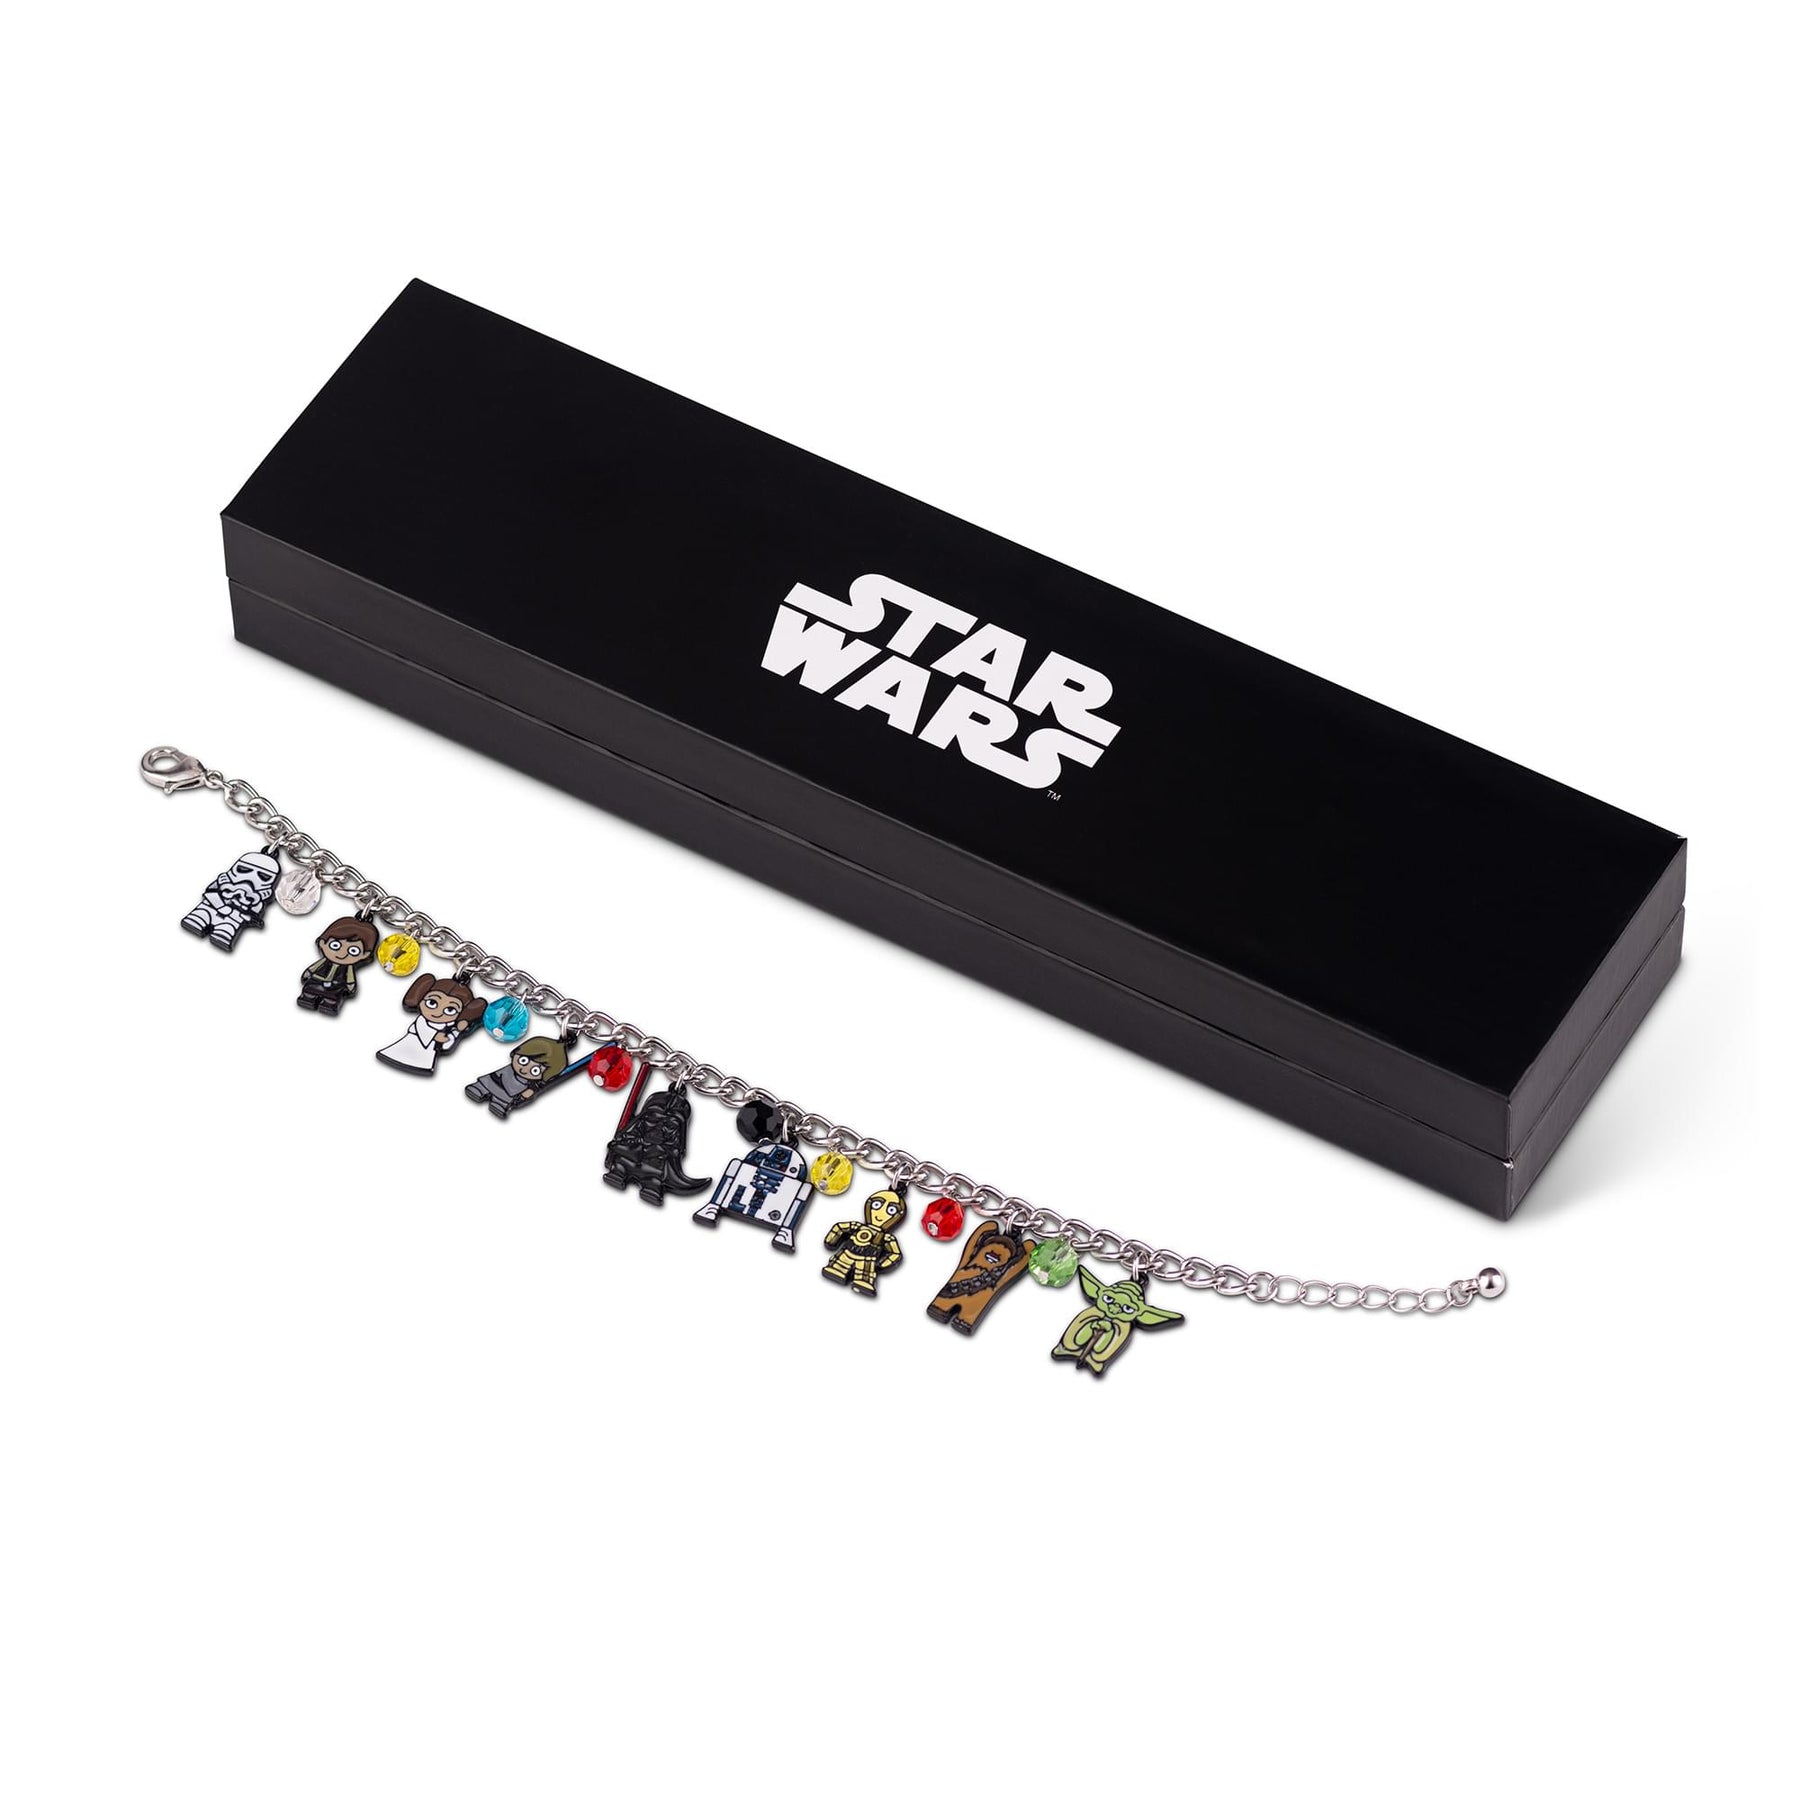 Star Wars Cute 15mm Chibi Characters Pendant Enamel Charms Bracelet Jewelry